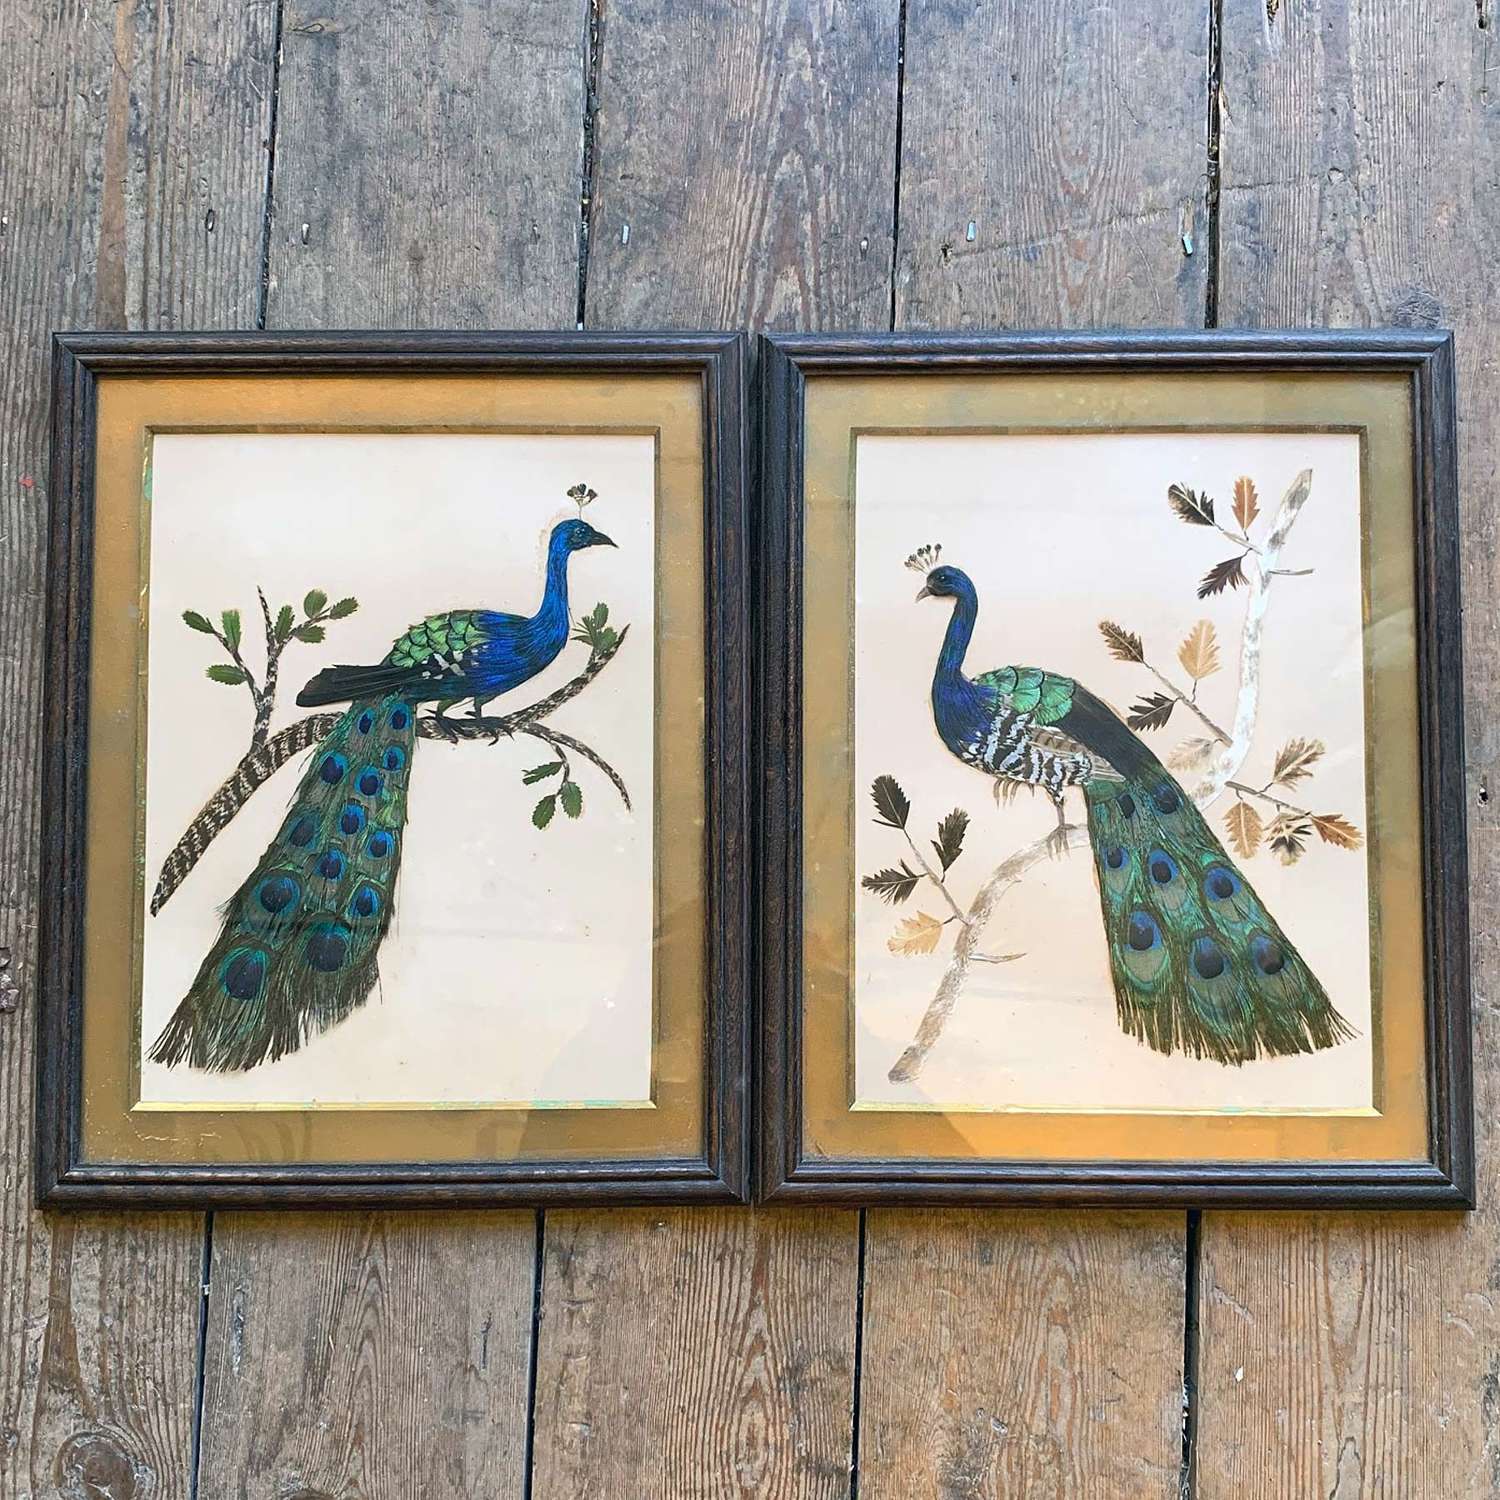 Two framed Georgian Silk works depicting Peacocks